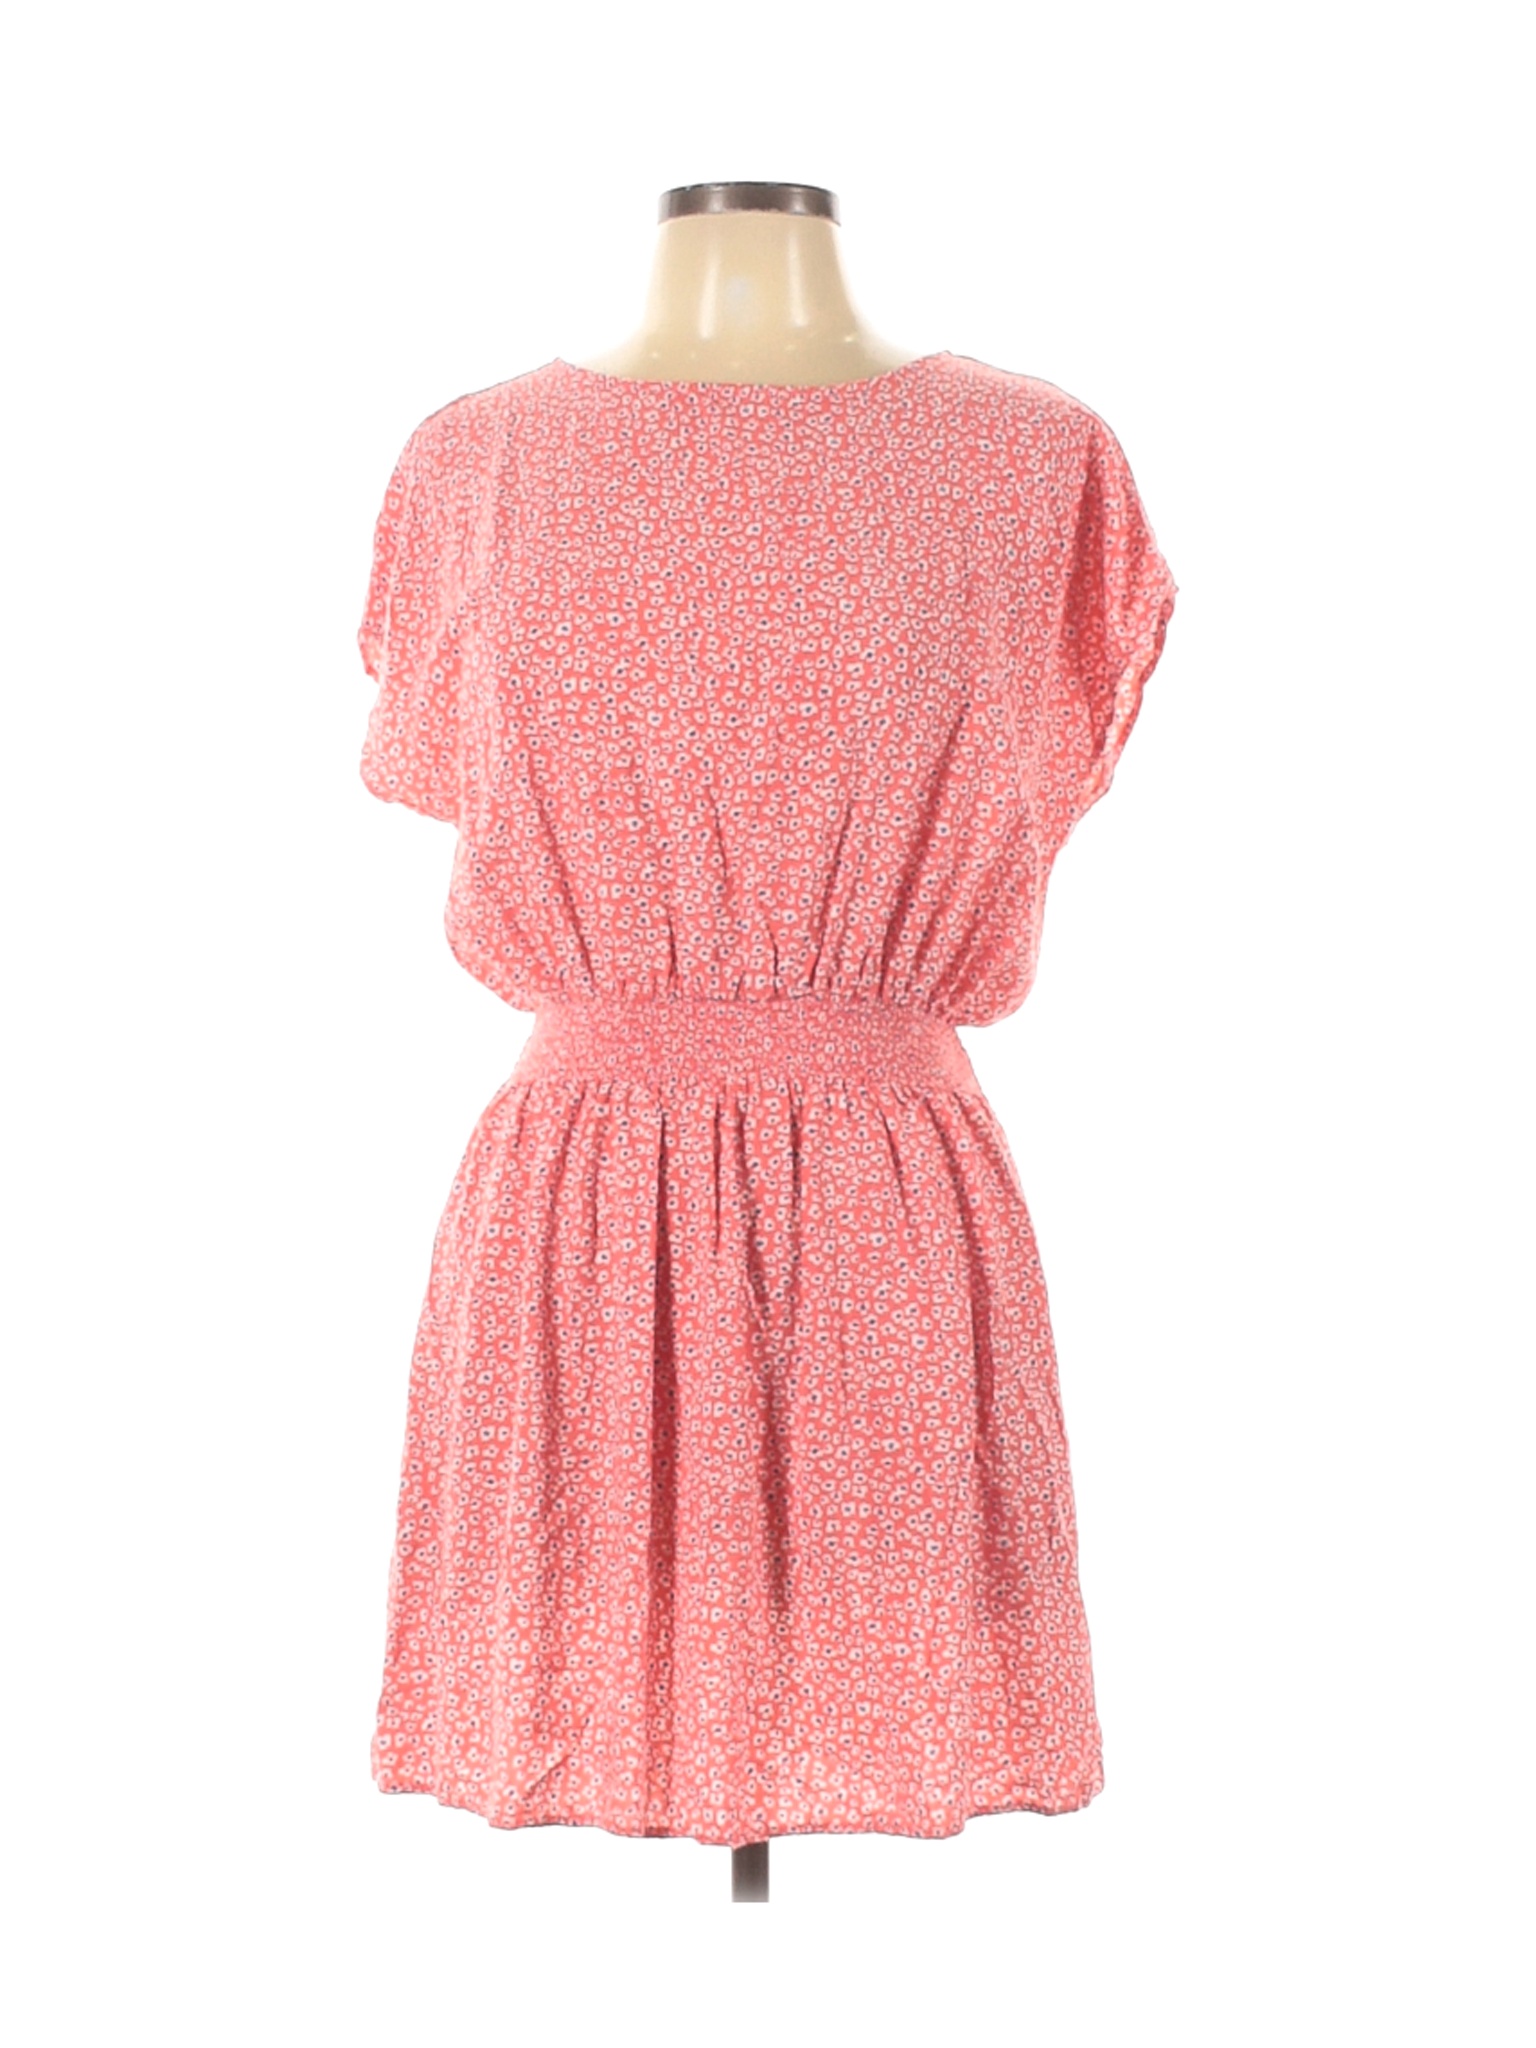 Gap Women Pink Casual Dress L Petites | eBay